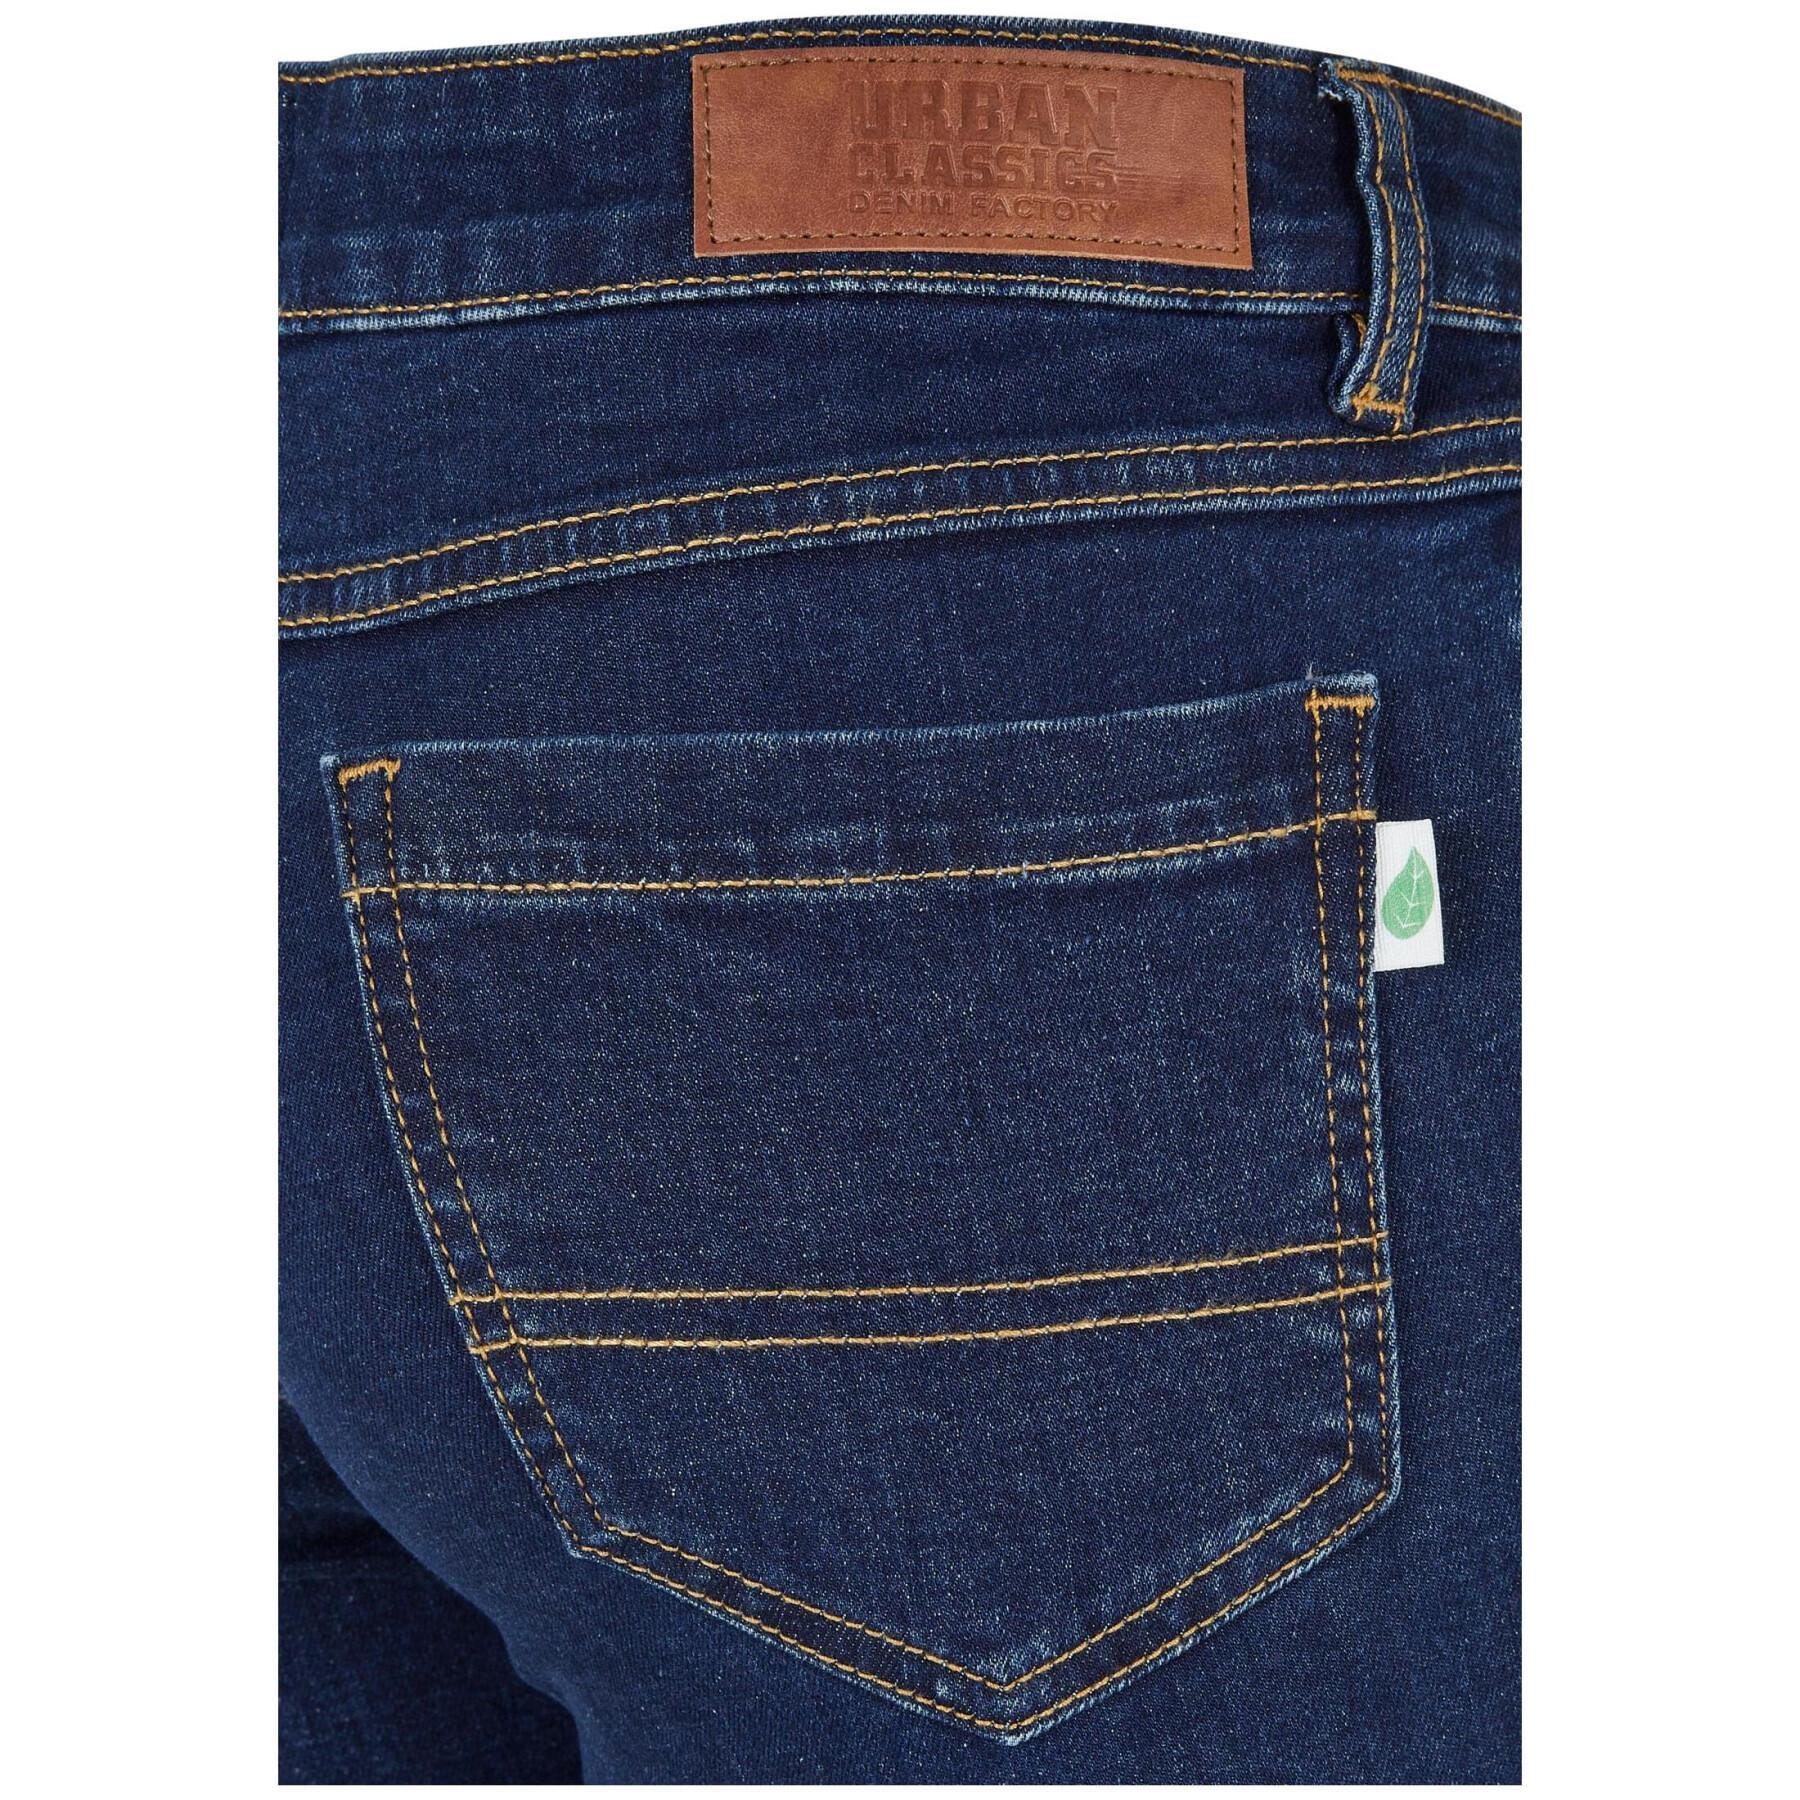 Women's flared jeans Urban Classics Organic